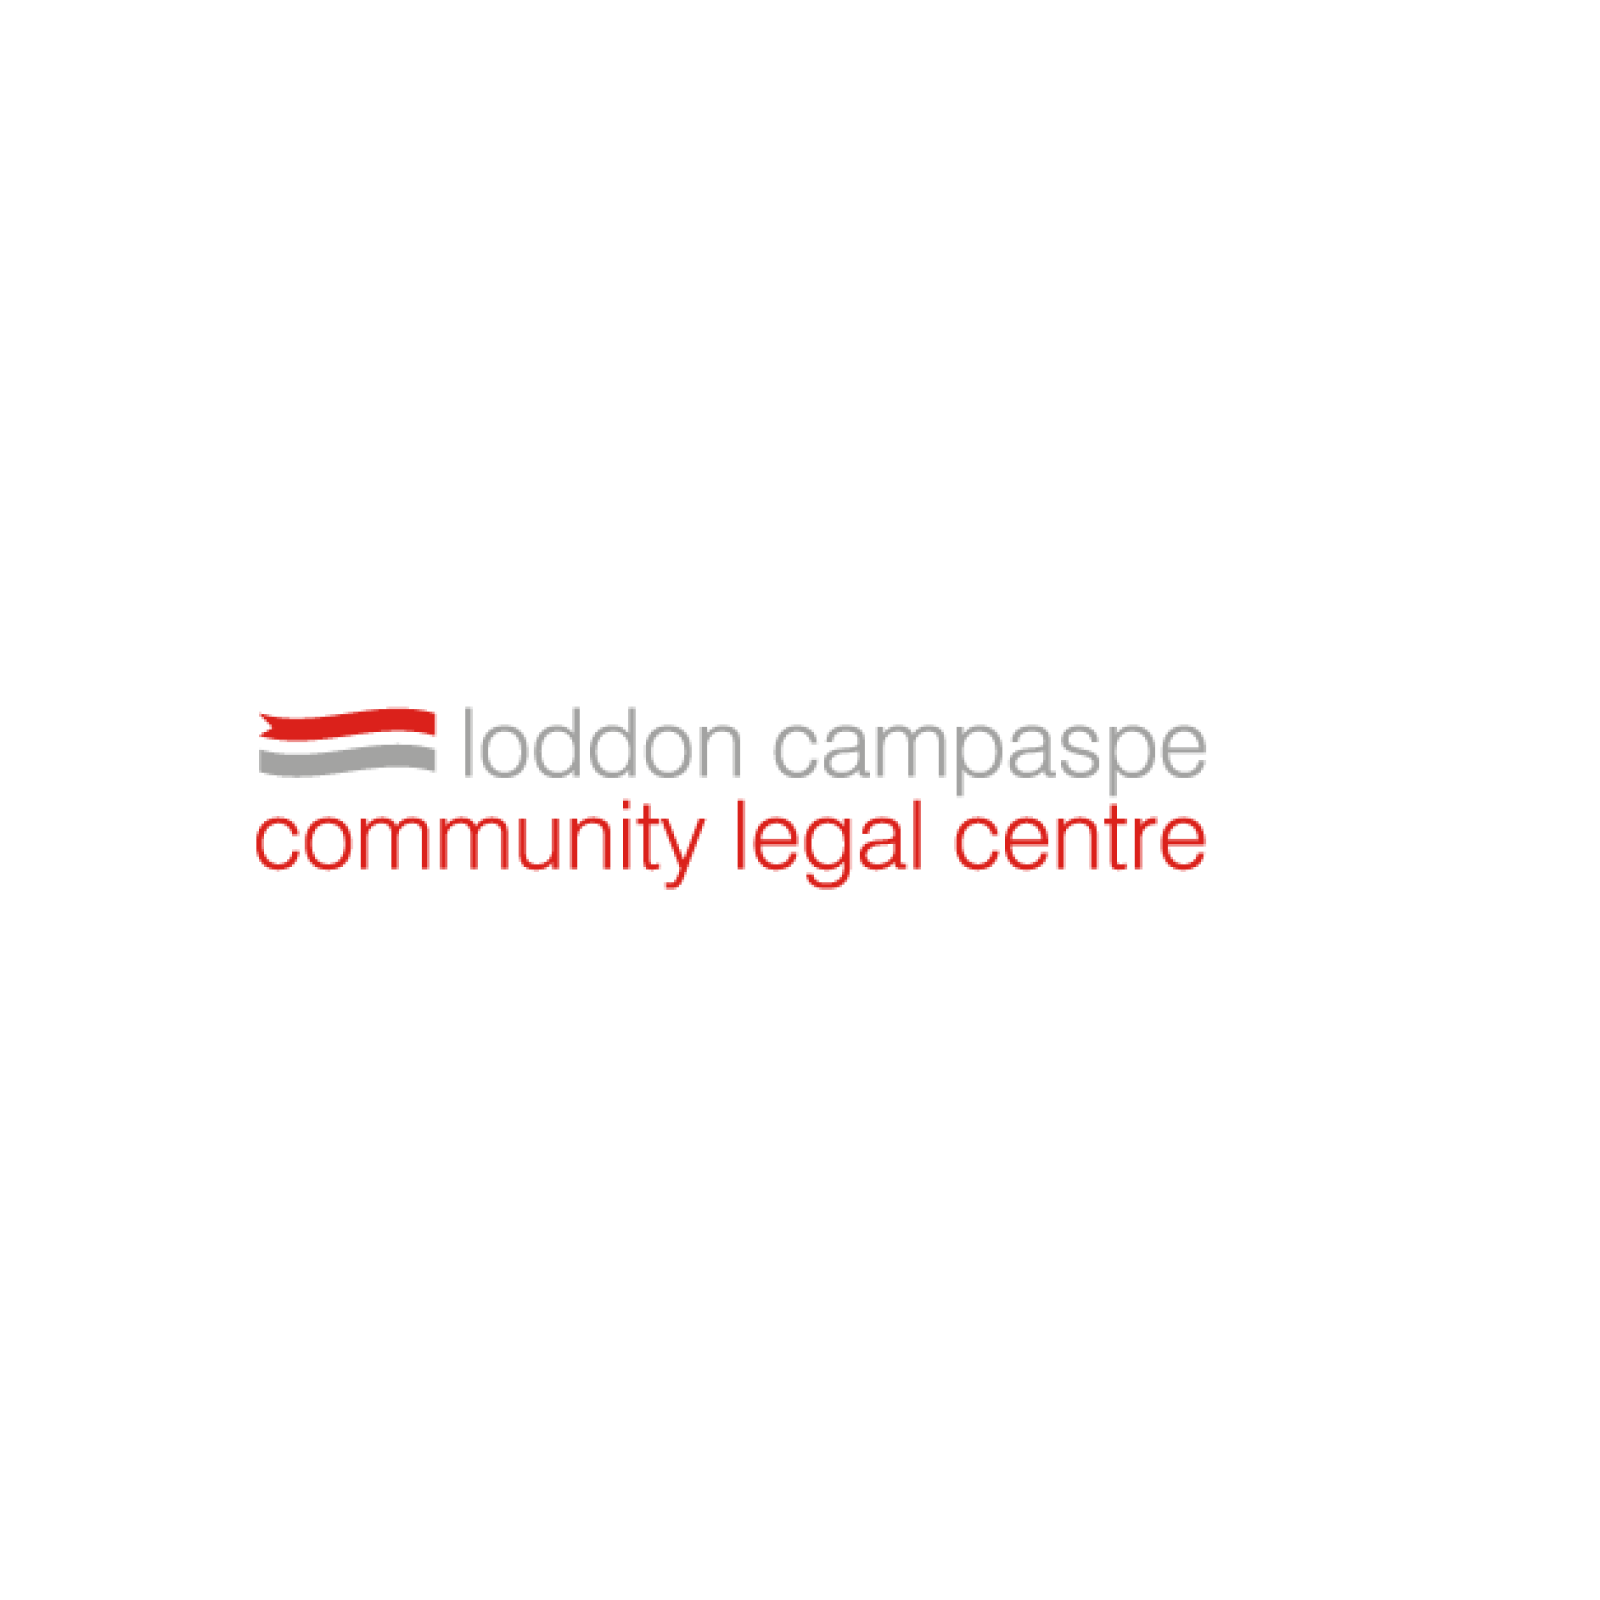 Loddon Campaspe Community Legal Centre logo